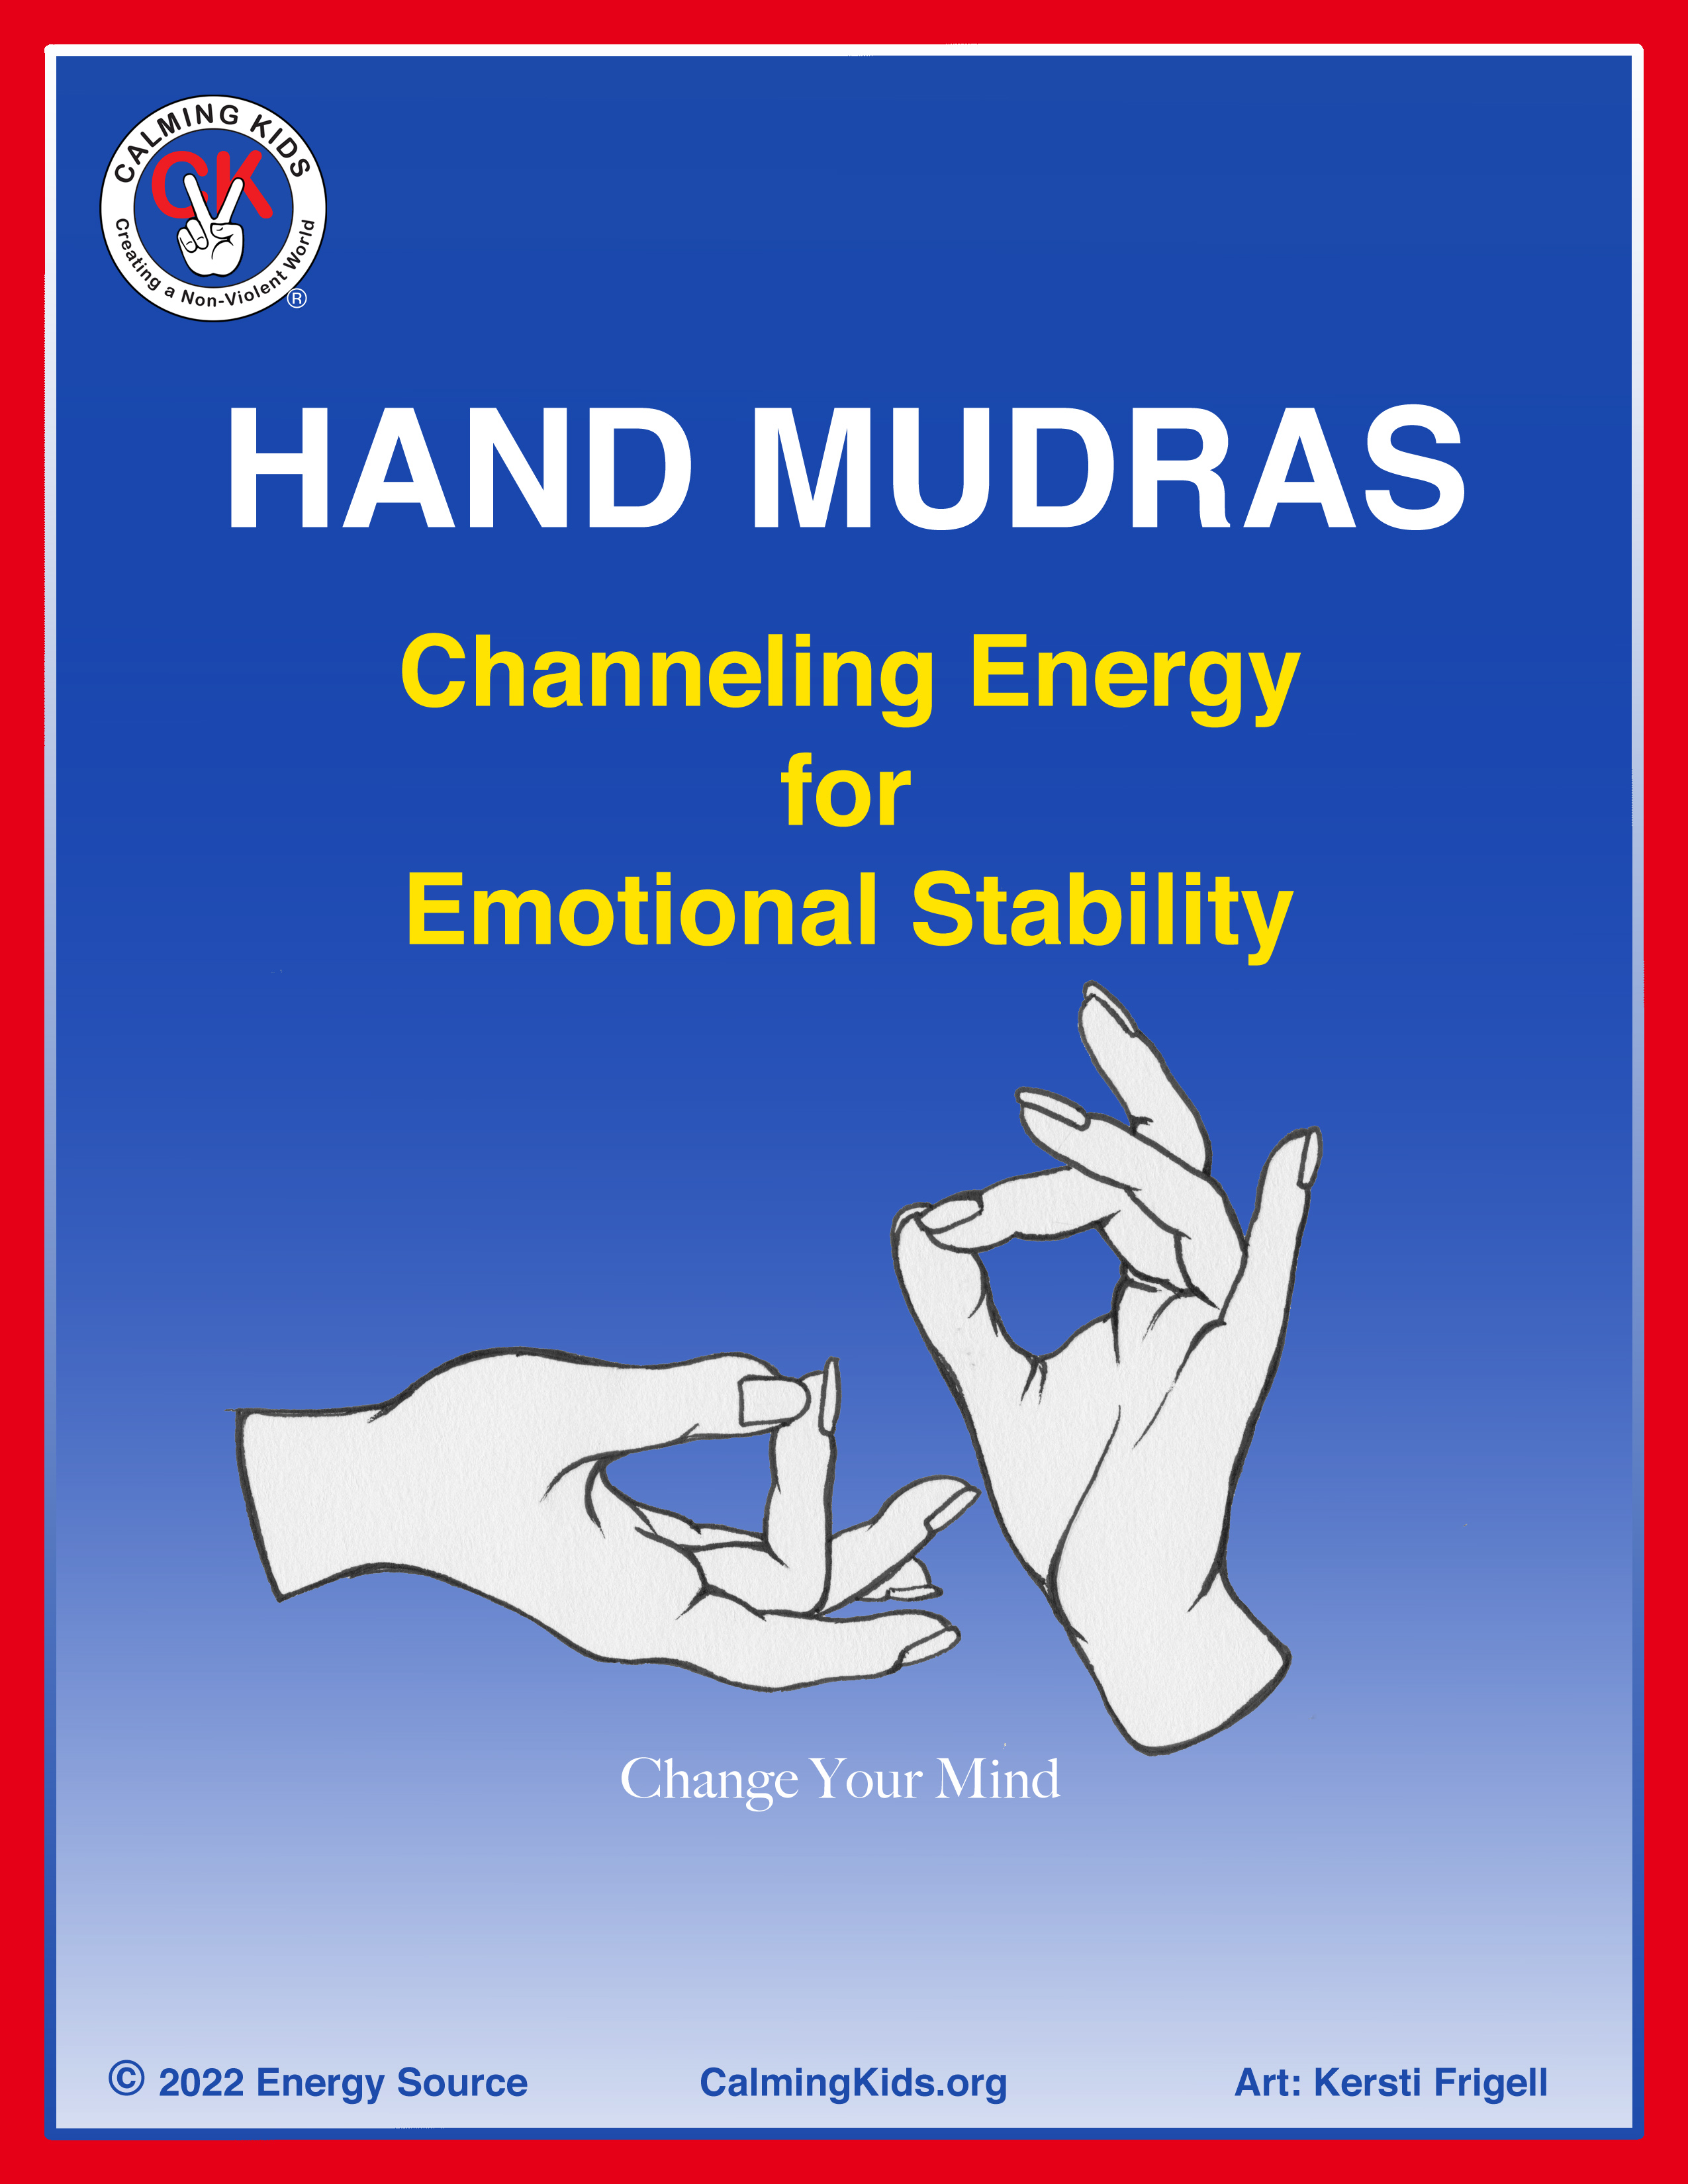 Hands Mudras